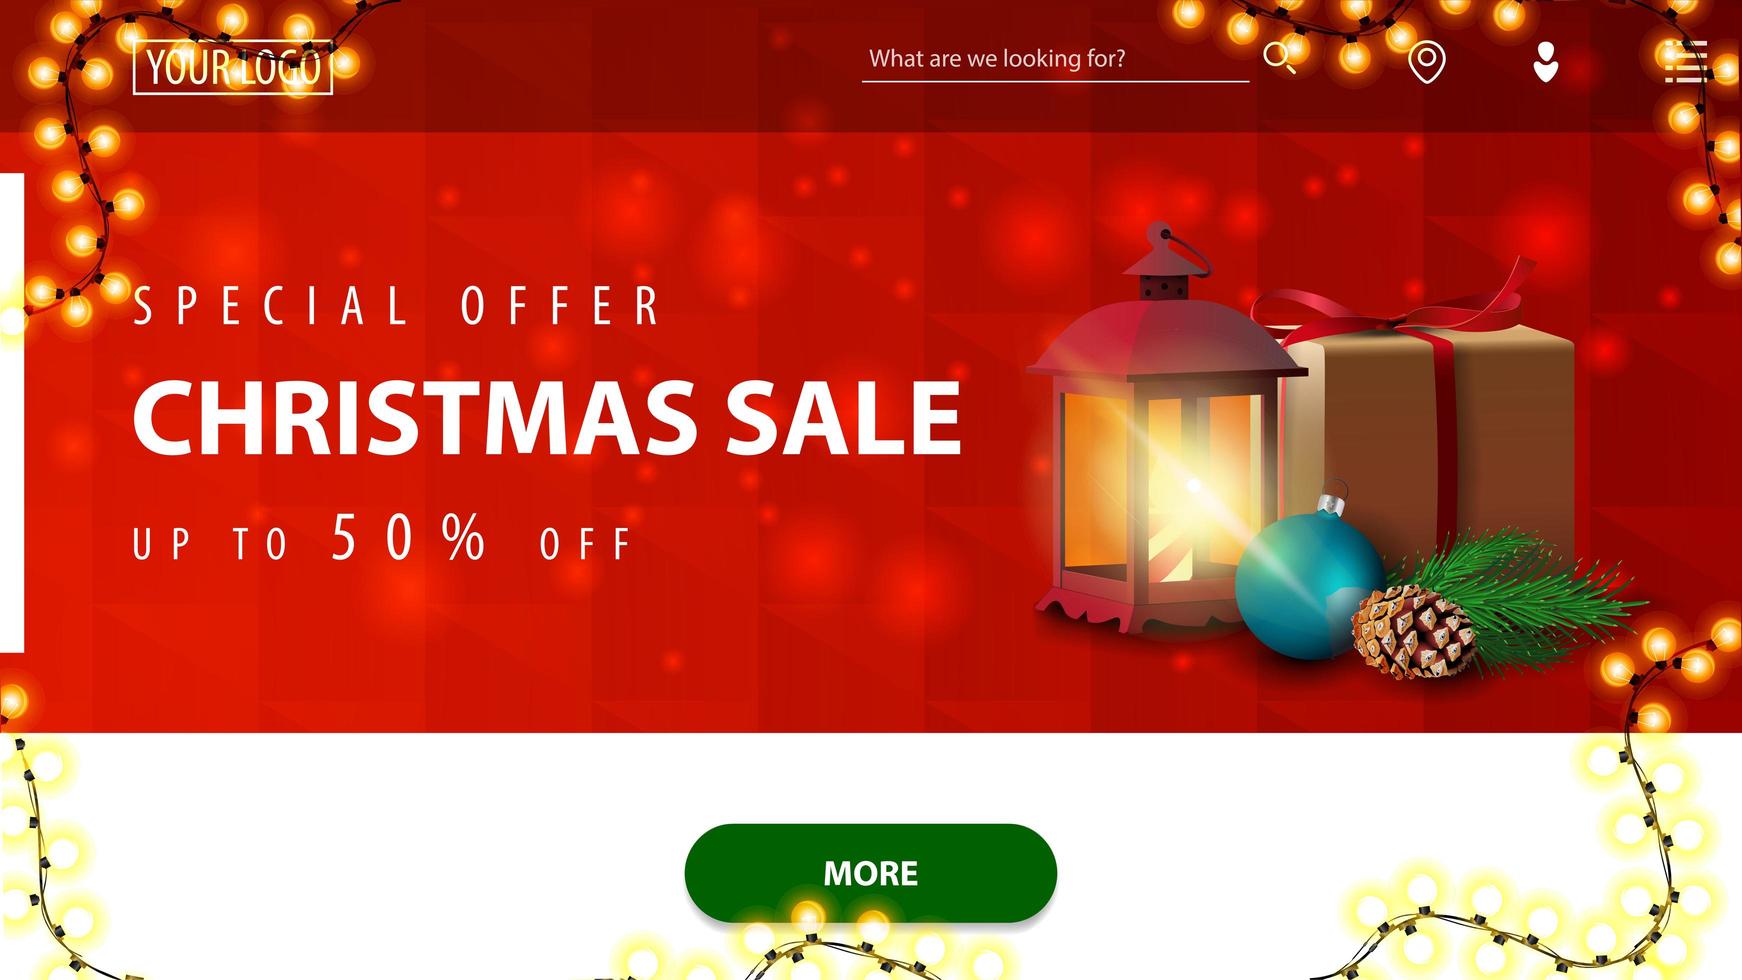 speciale aanbieding, kerstuitverkoop, tot 50 korting, rode en witte kortingsbanner voor website met veelhoekige textuur, slinger, groene knop en antieke lamp met cadeau vector